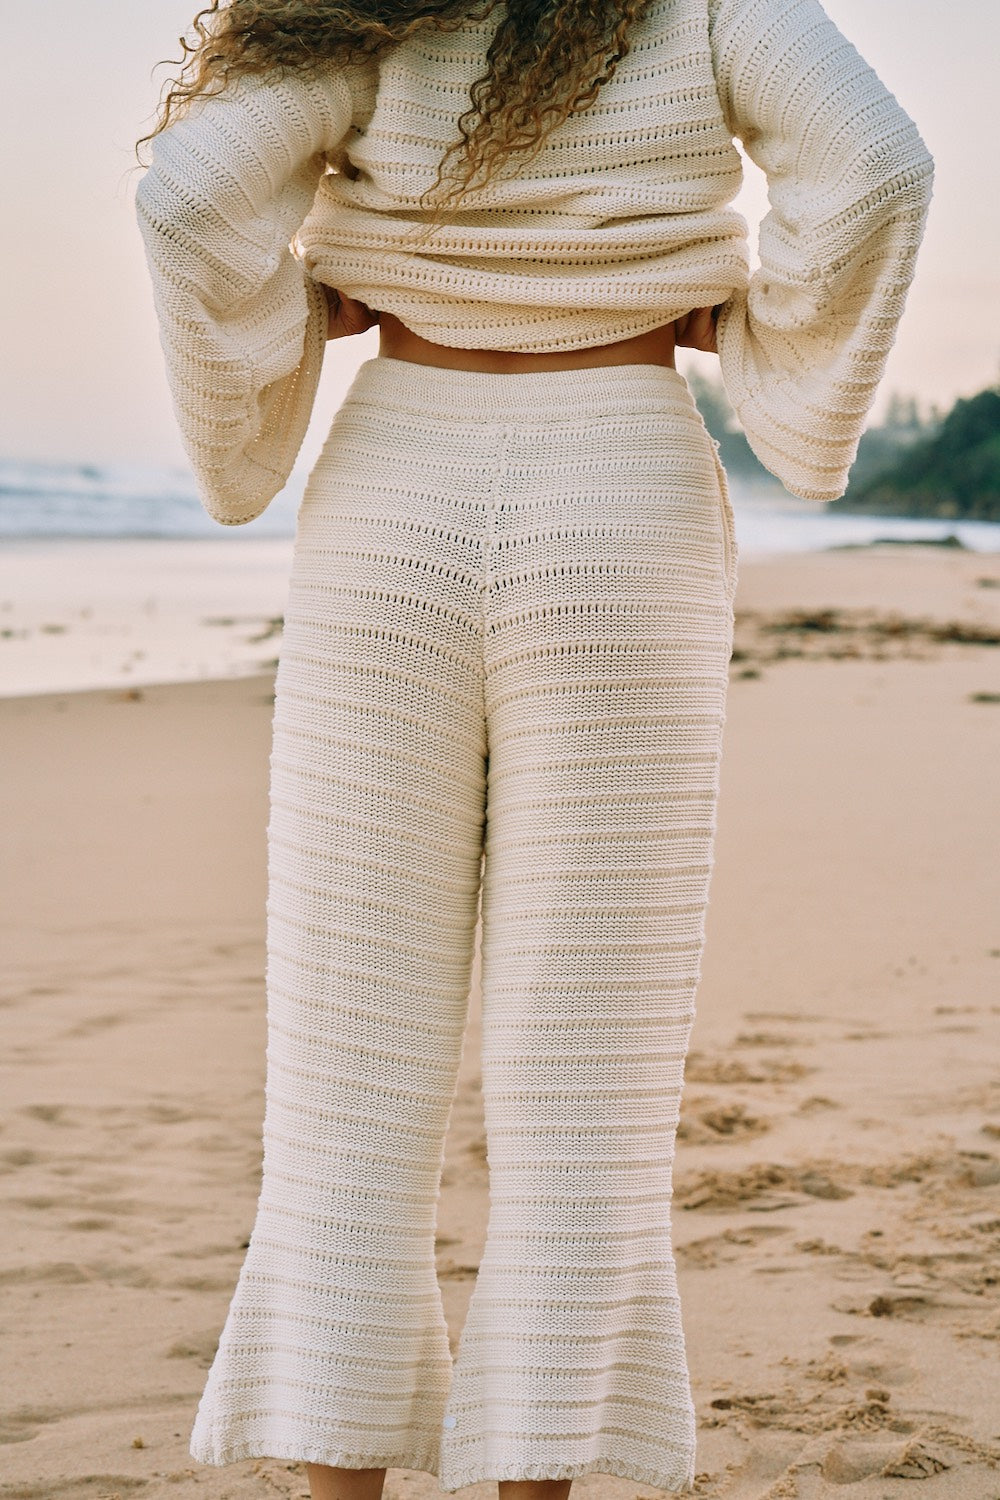 Willow Knit Pants White - Malia The Label - Slow Fashion